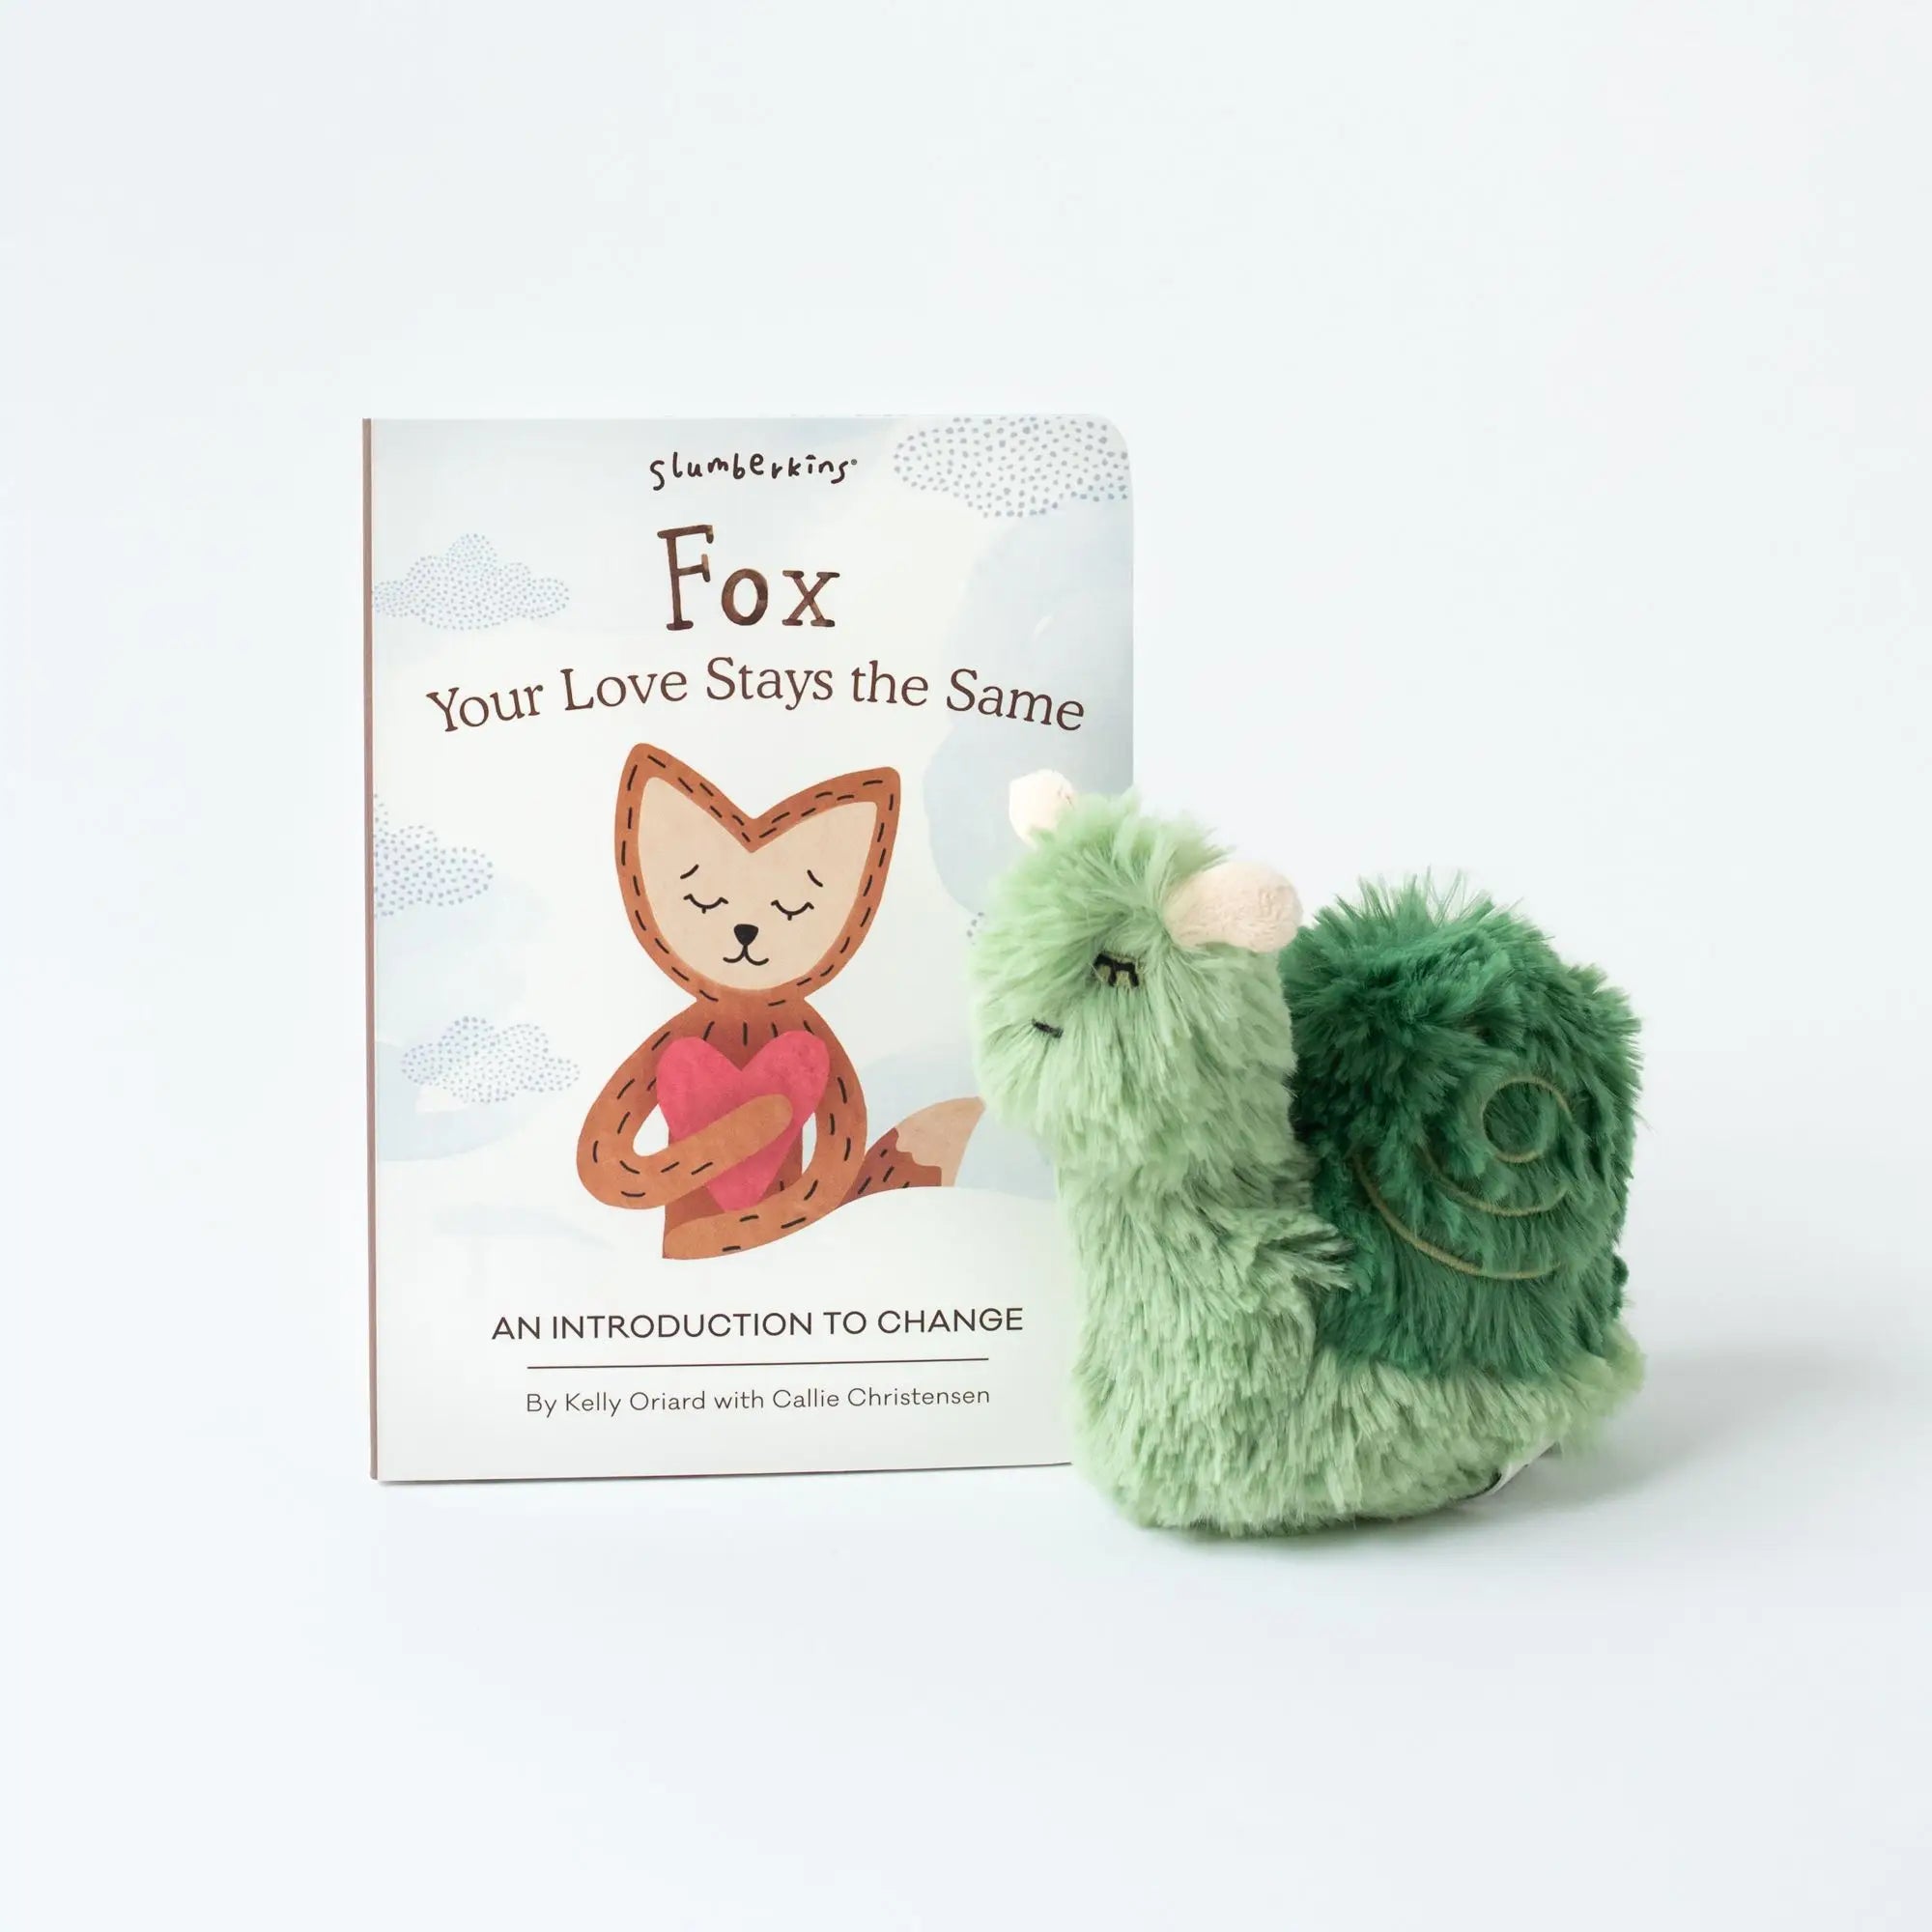 GREEN SNAIL MINI & FOX INTRO BOOK - CHANGE